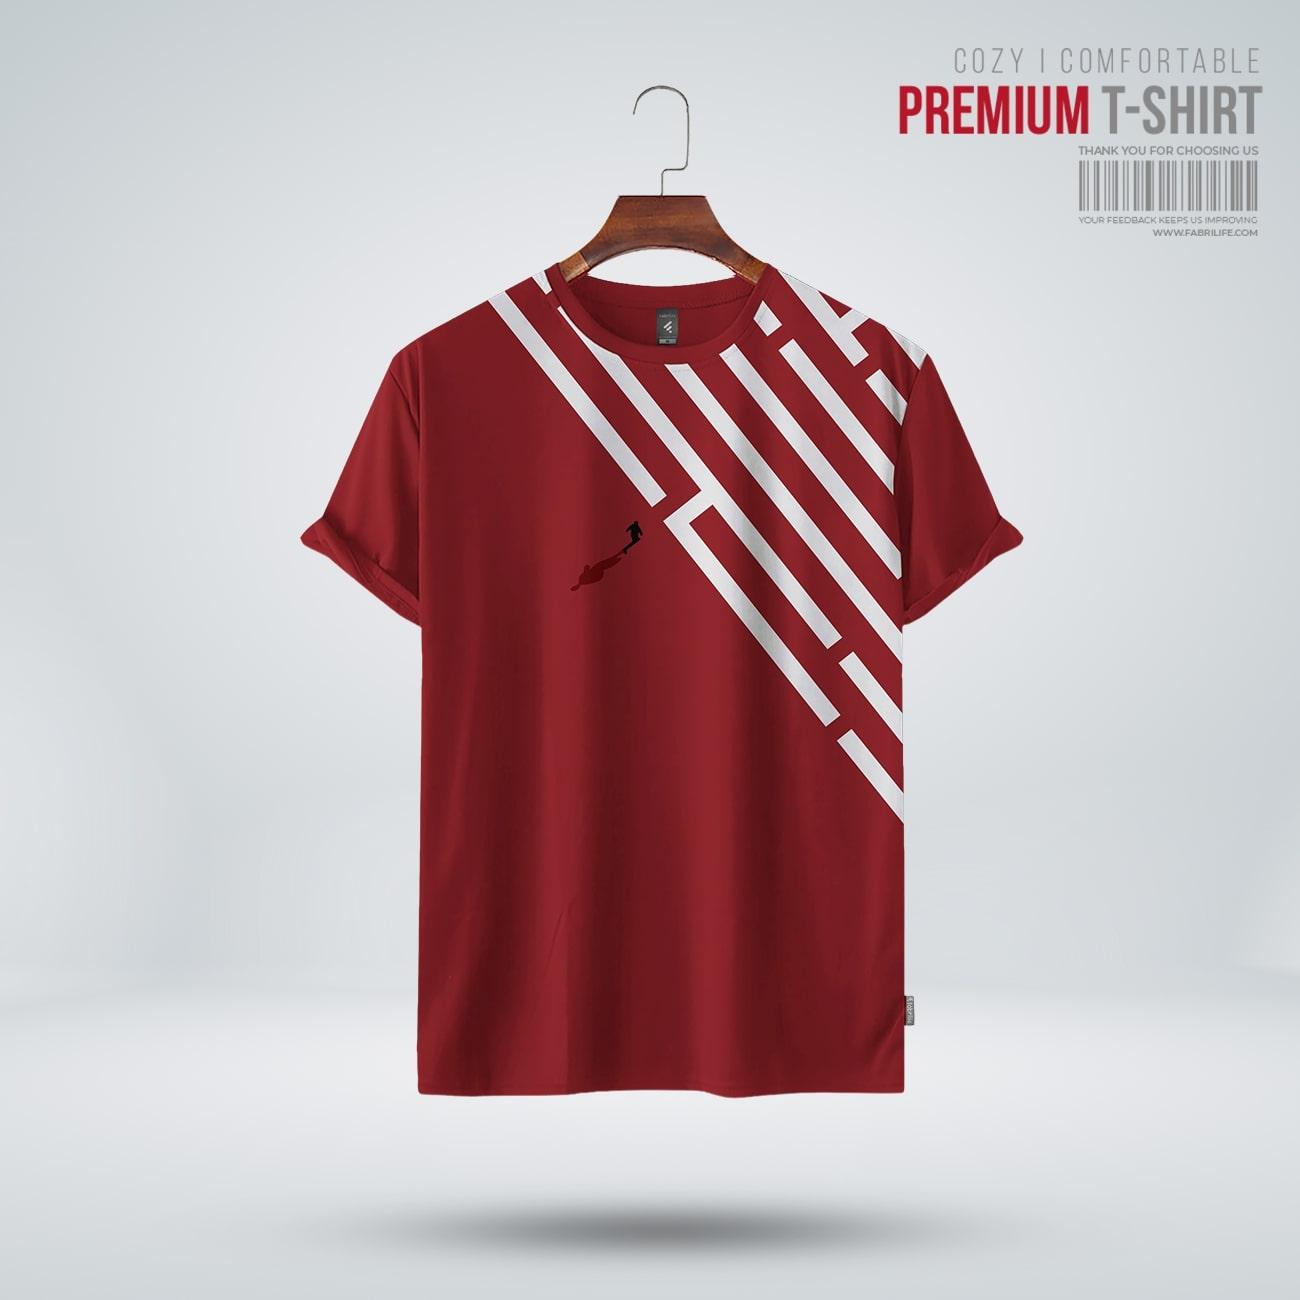 Fabrilife Mens Premium T-shirt - Maze